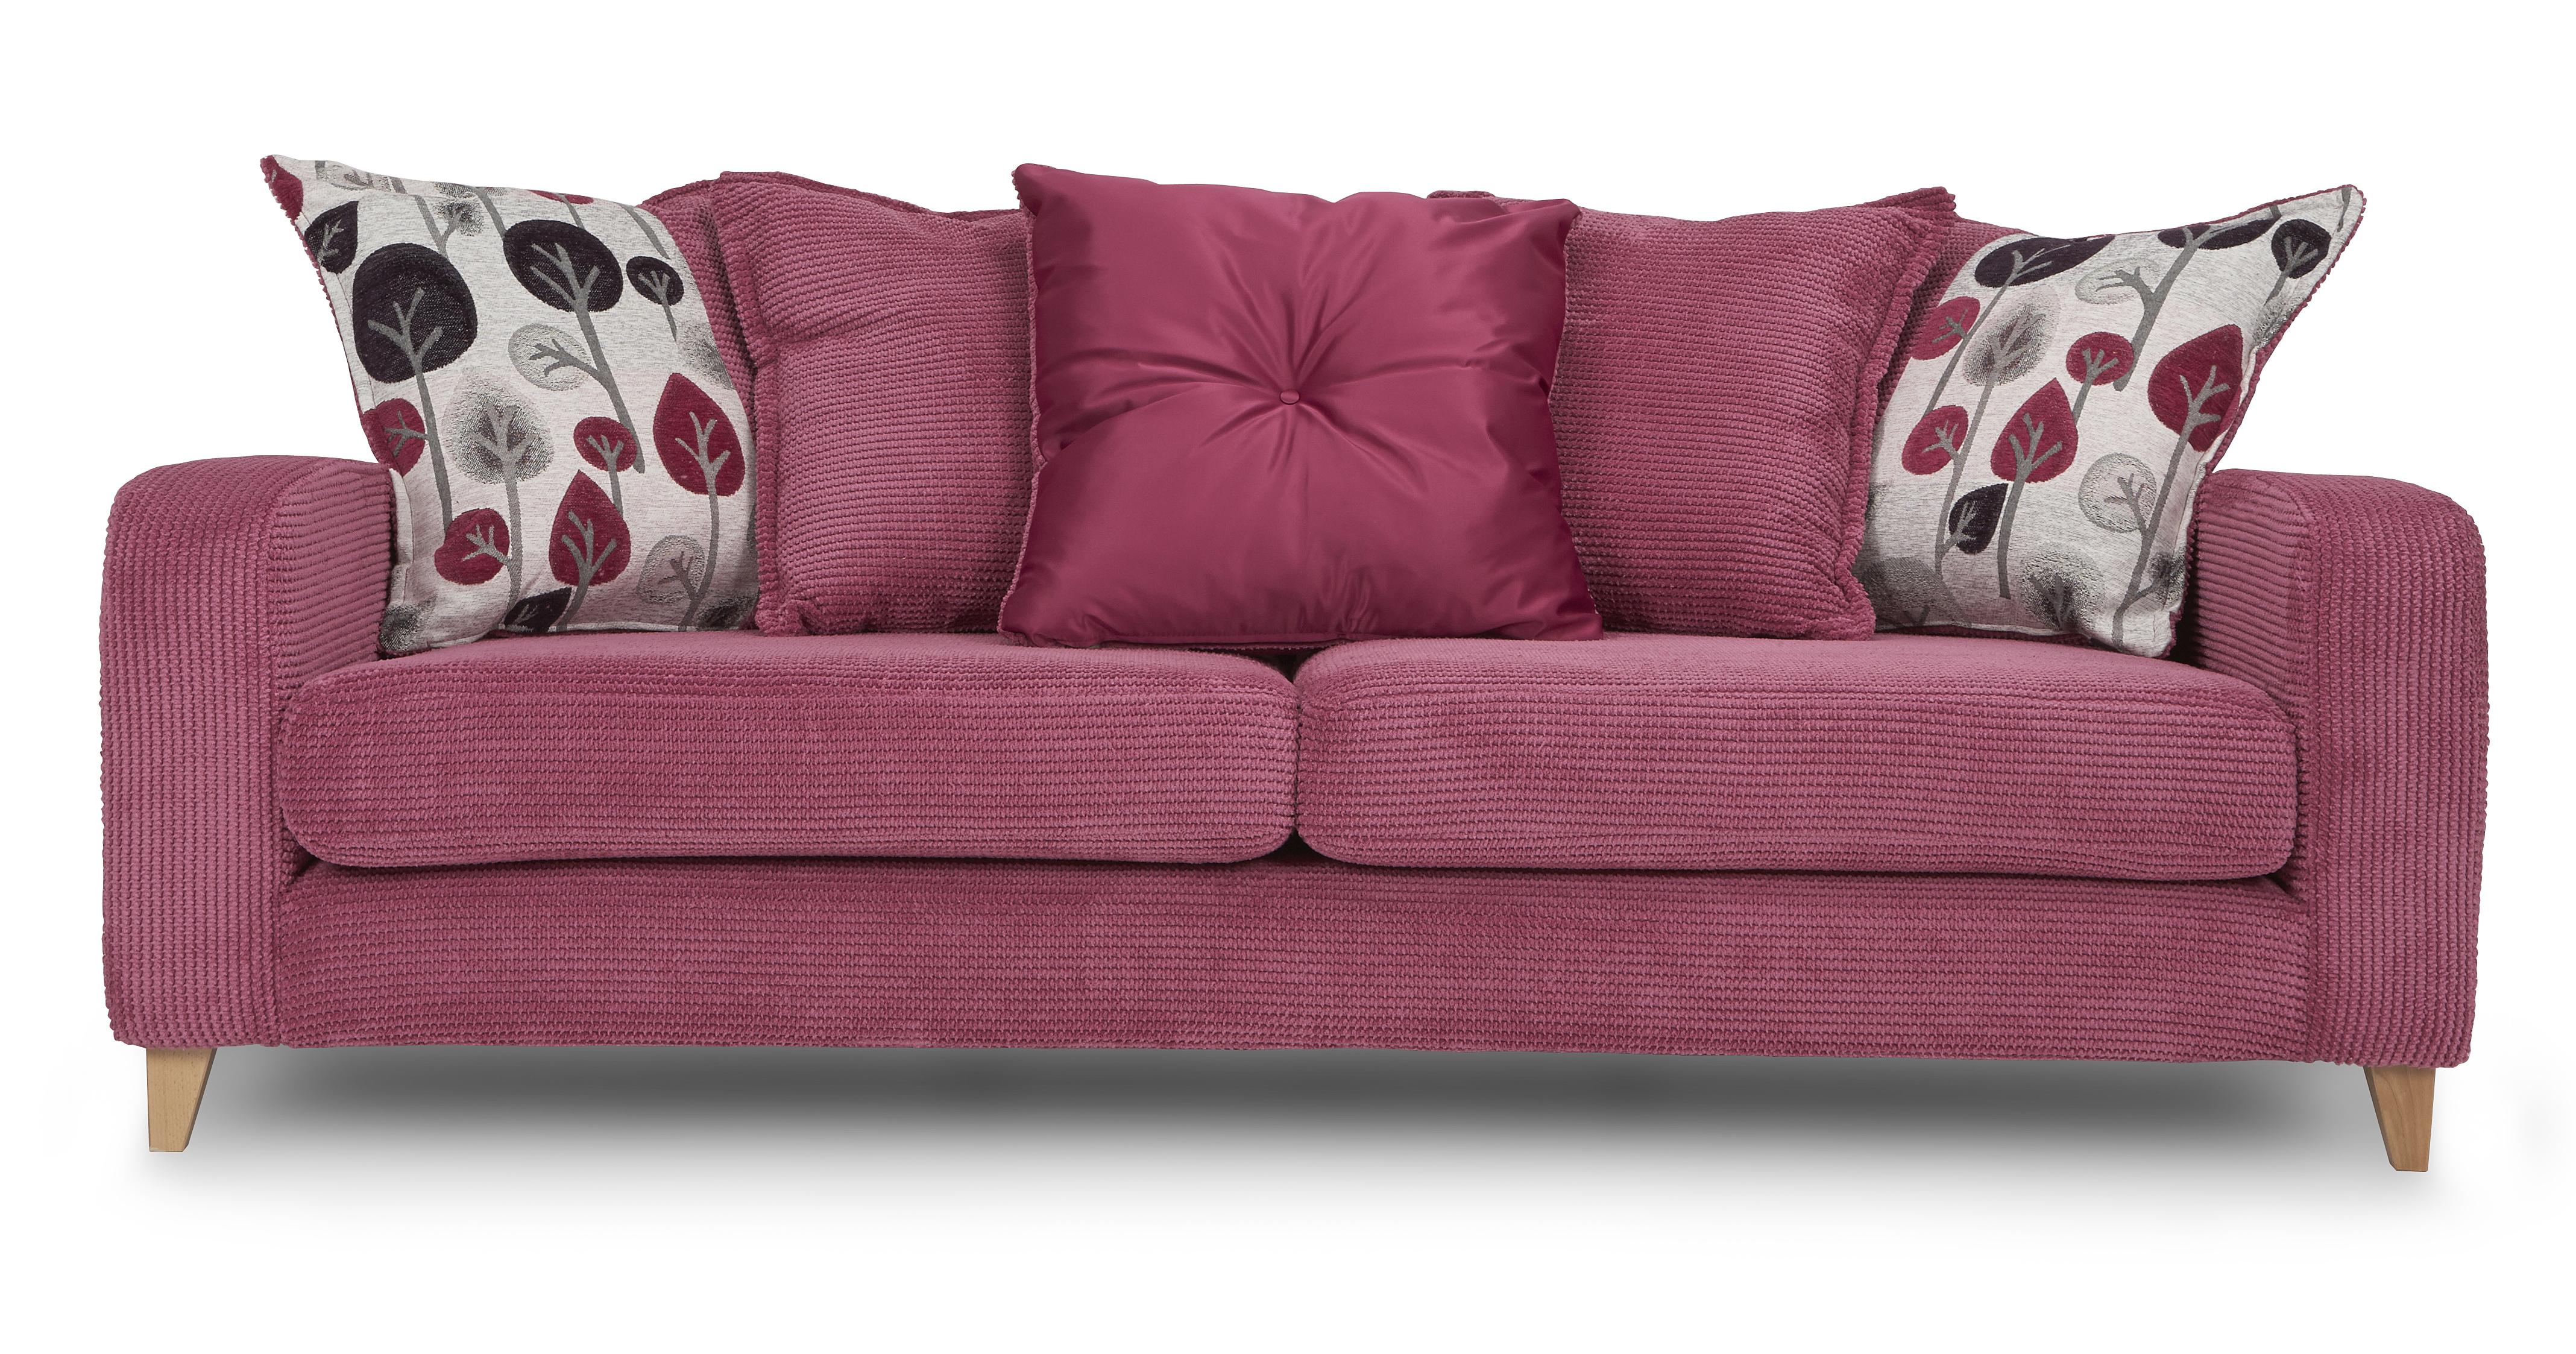 DFS Blush Pink Fabric Sofa - New Pillow Back 4 Seater Sofa | eBay